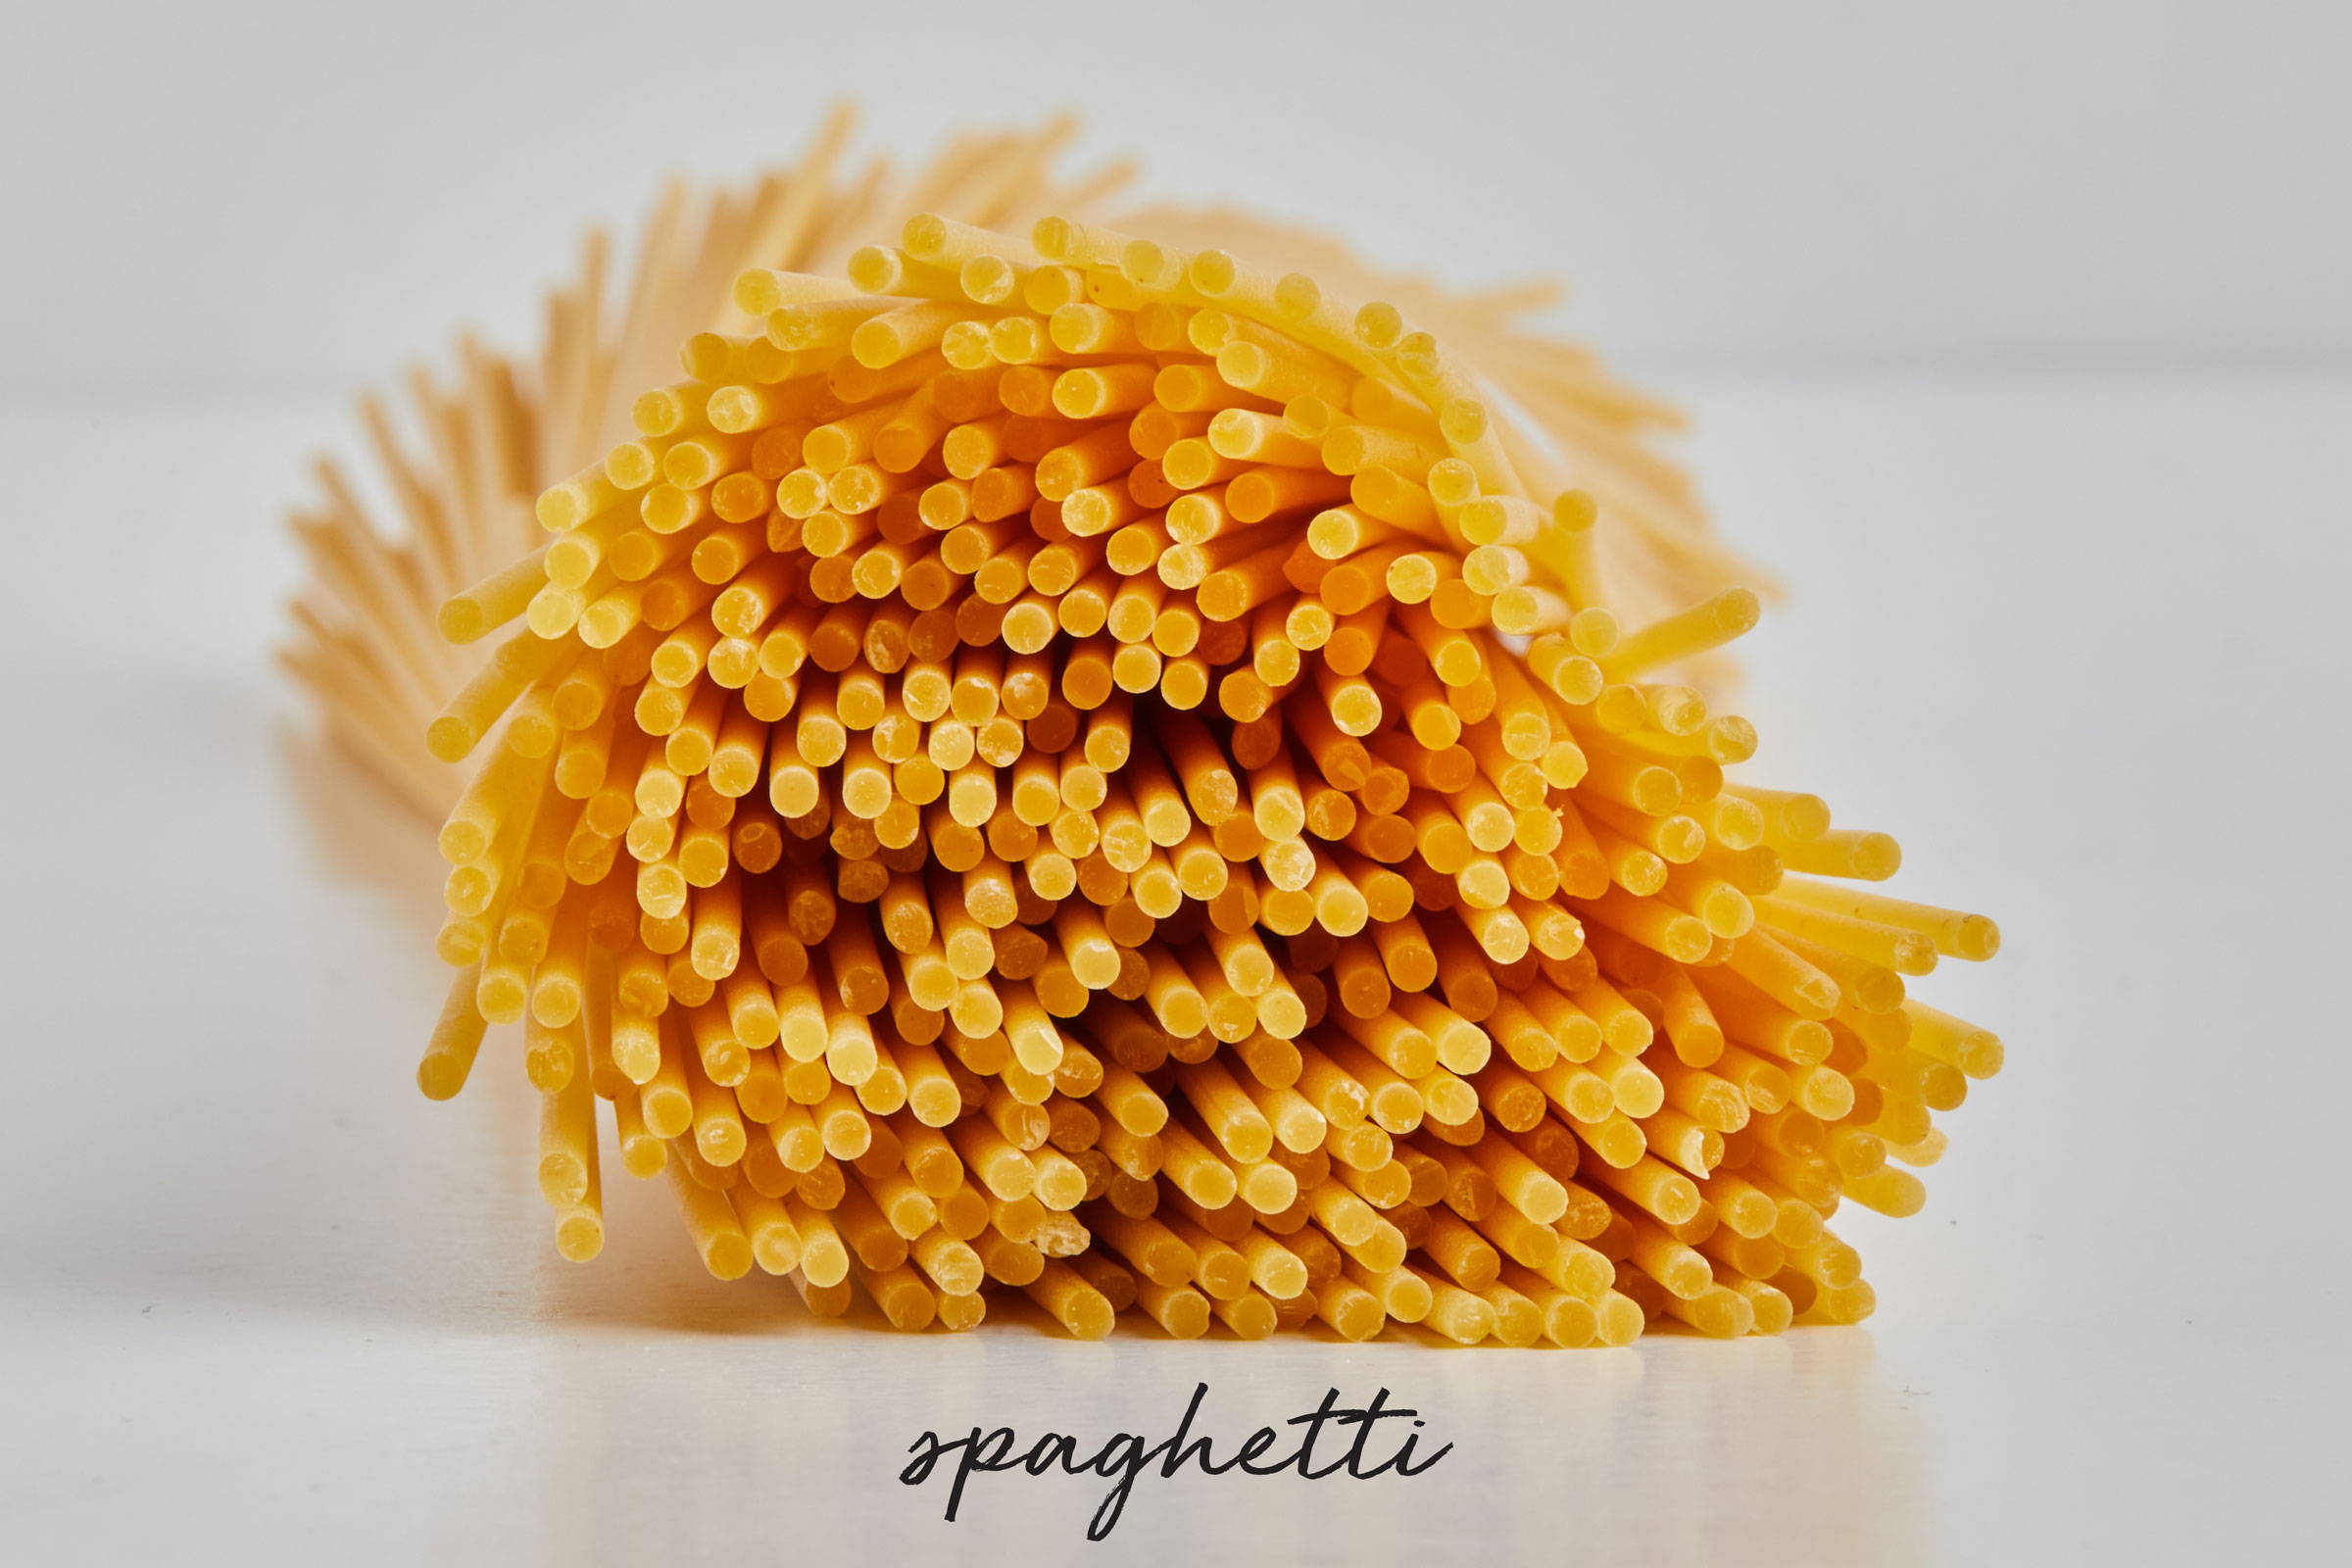 Bundle of uncooked spaghetti pasta